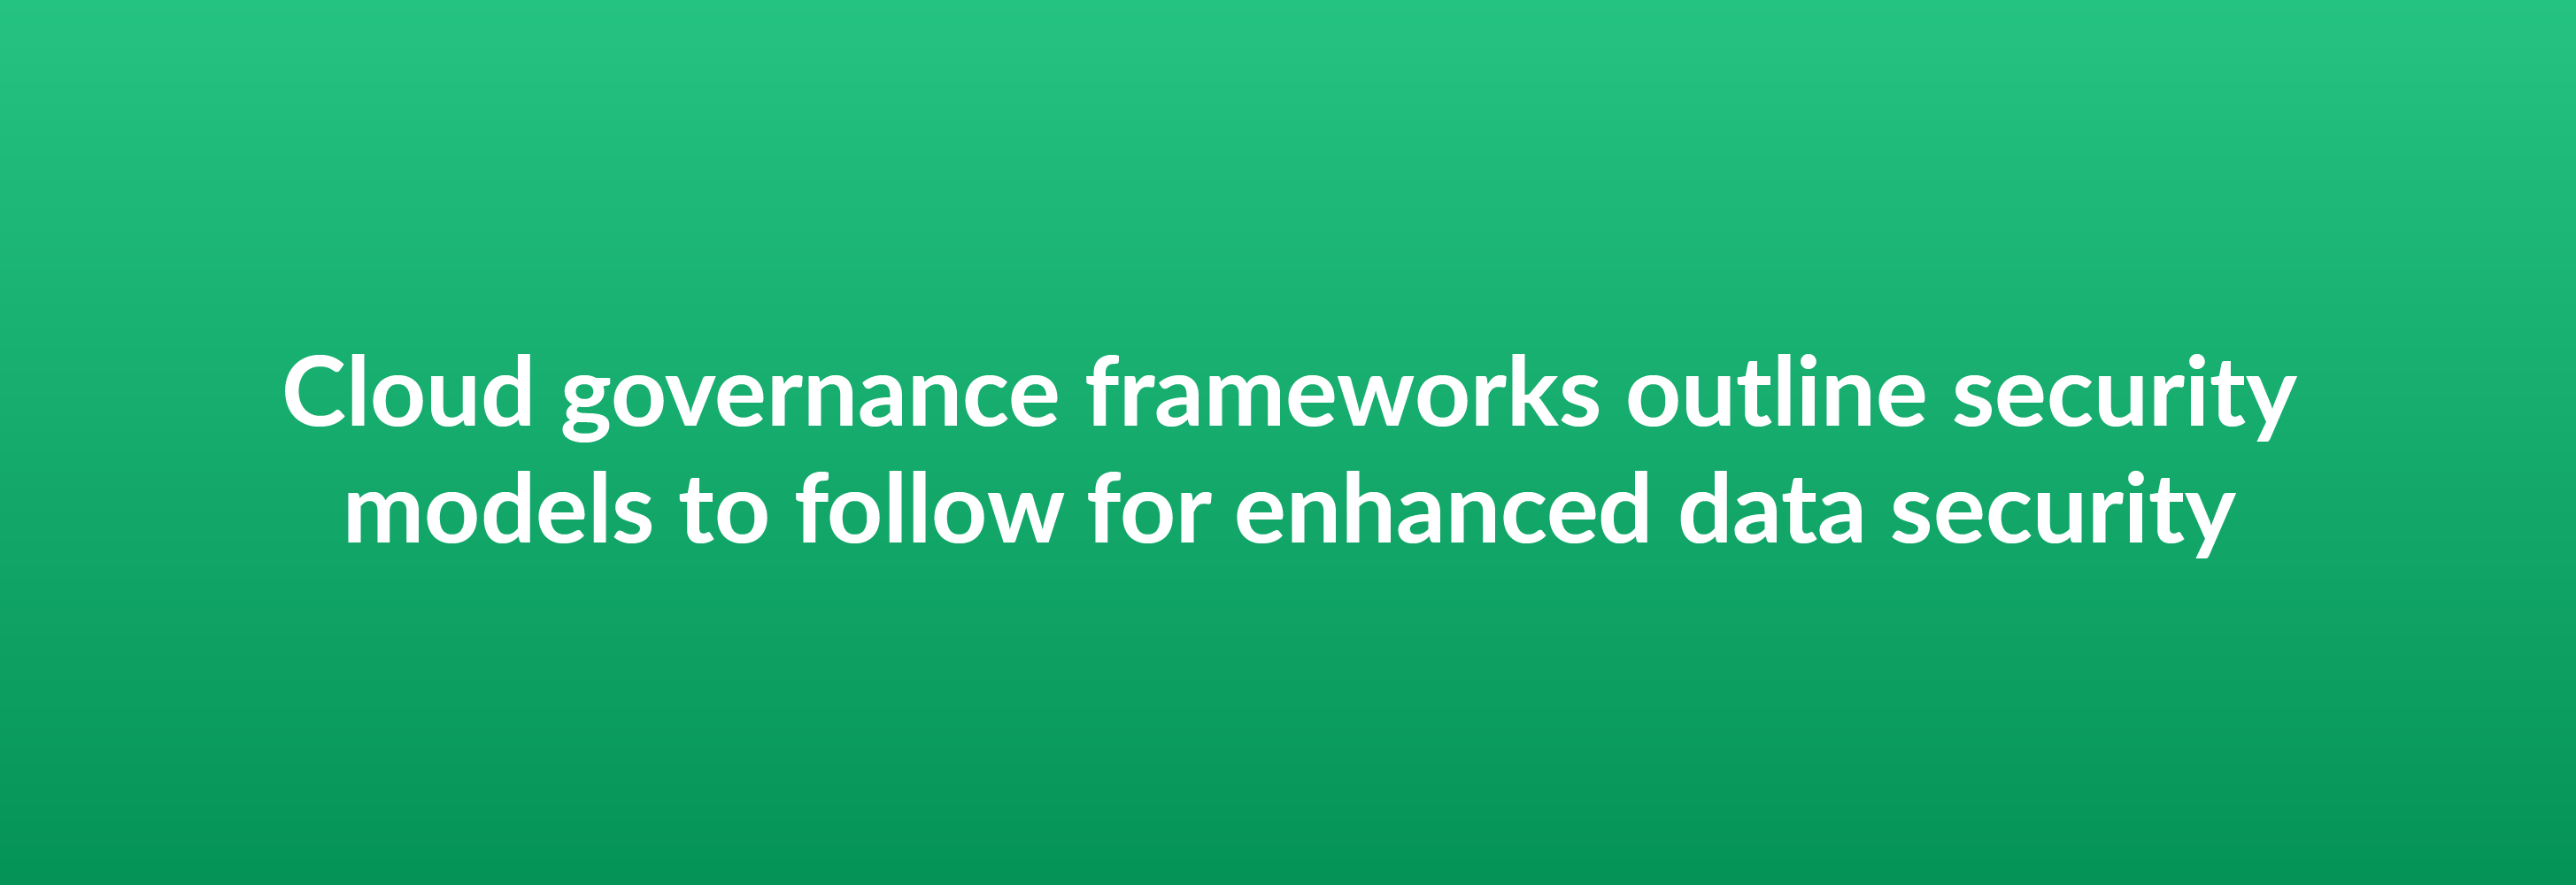 Cloud governance frameworks outline security models to follow for enhanced data security